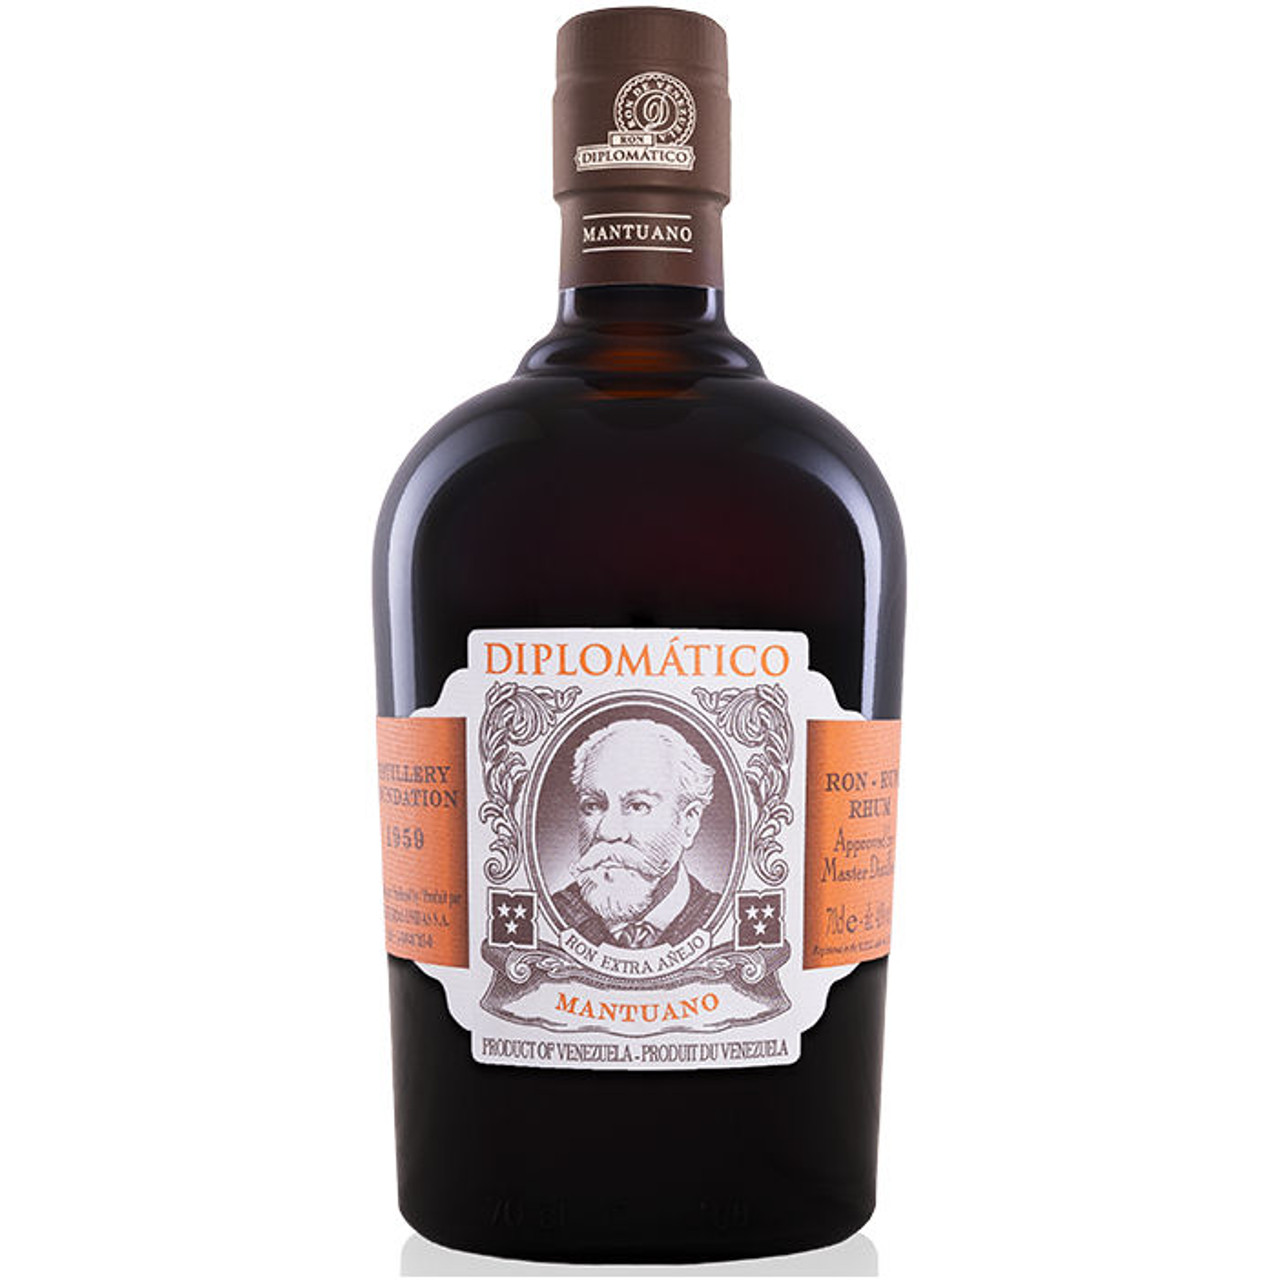 BUY] Diplomático Reserva Exclusiva Rum (6) Bottle Bundle w/free minis at